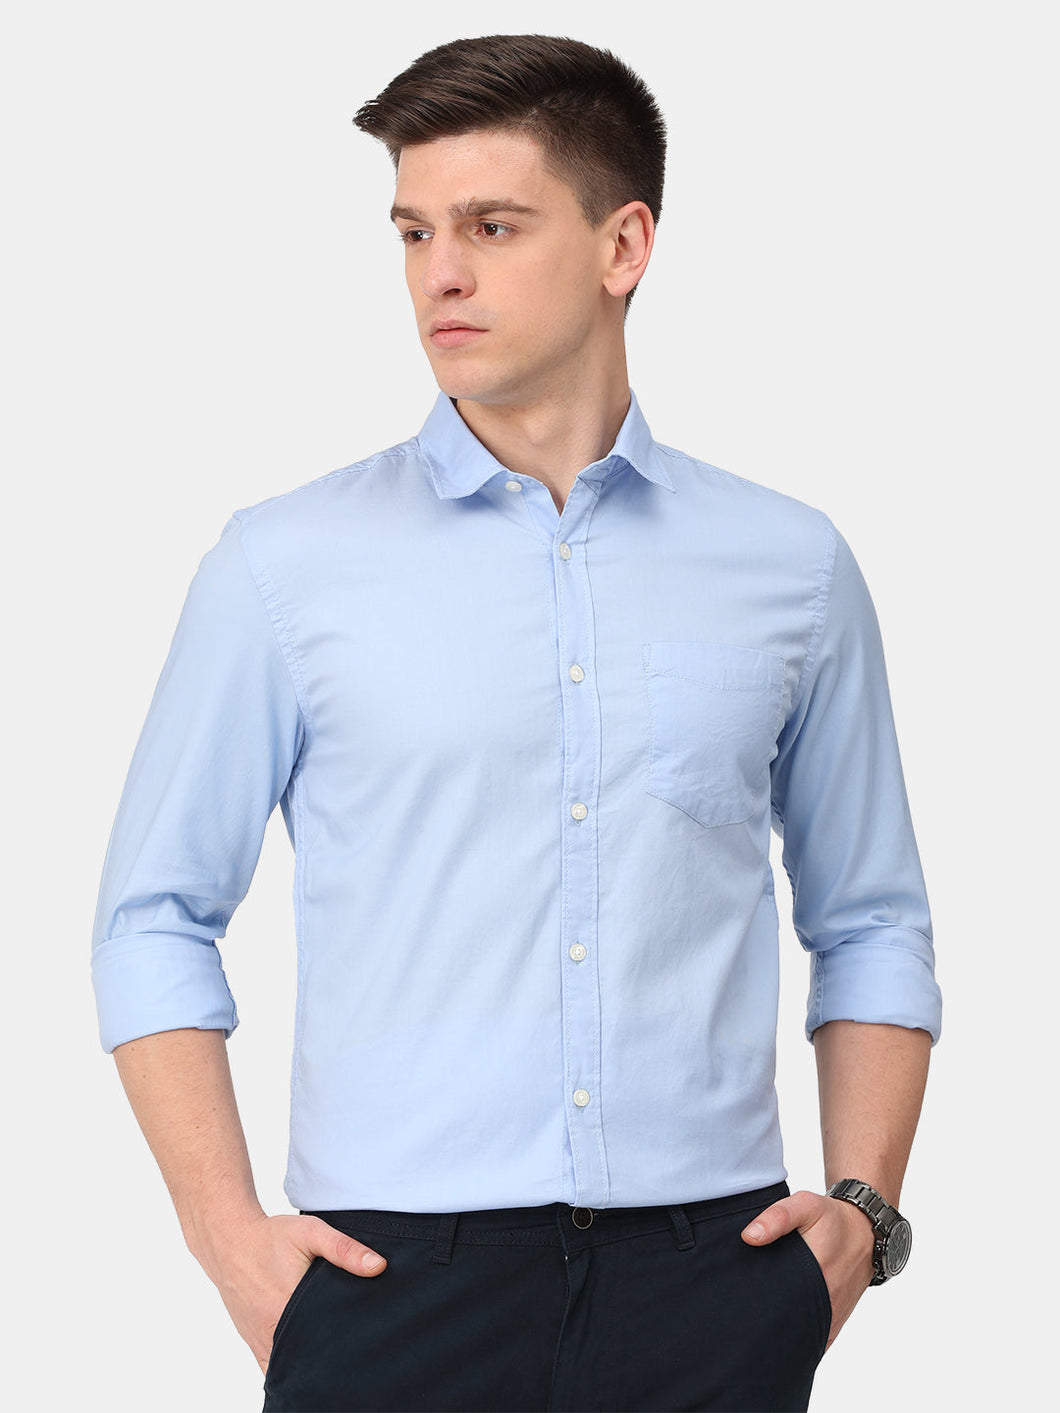 Solid Light Blue Shirt Shirt www.epysode.in 